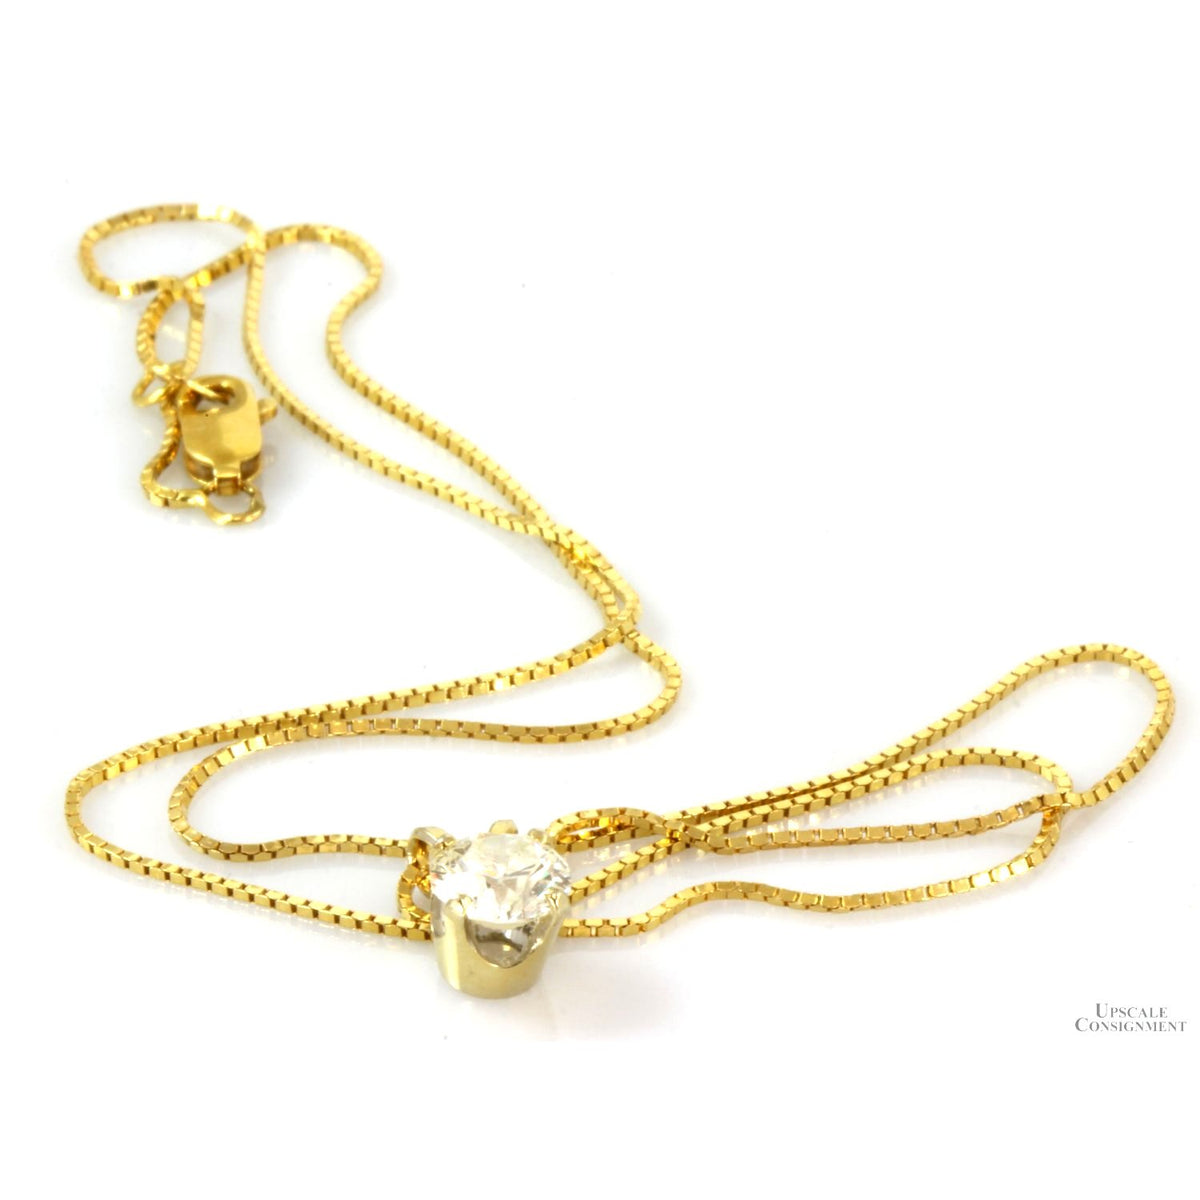 1.03ct. Diamond Solitaire Pendant 14K Yellow Gold Necklace